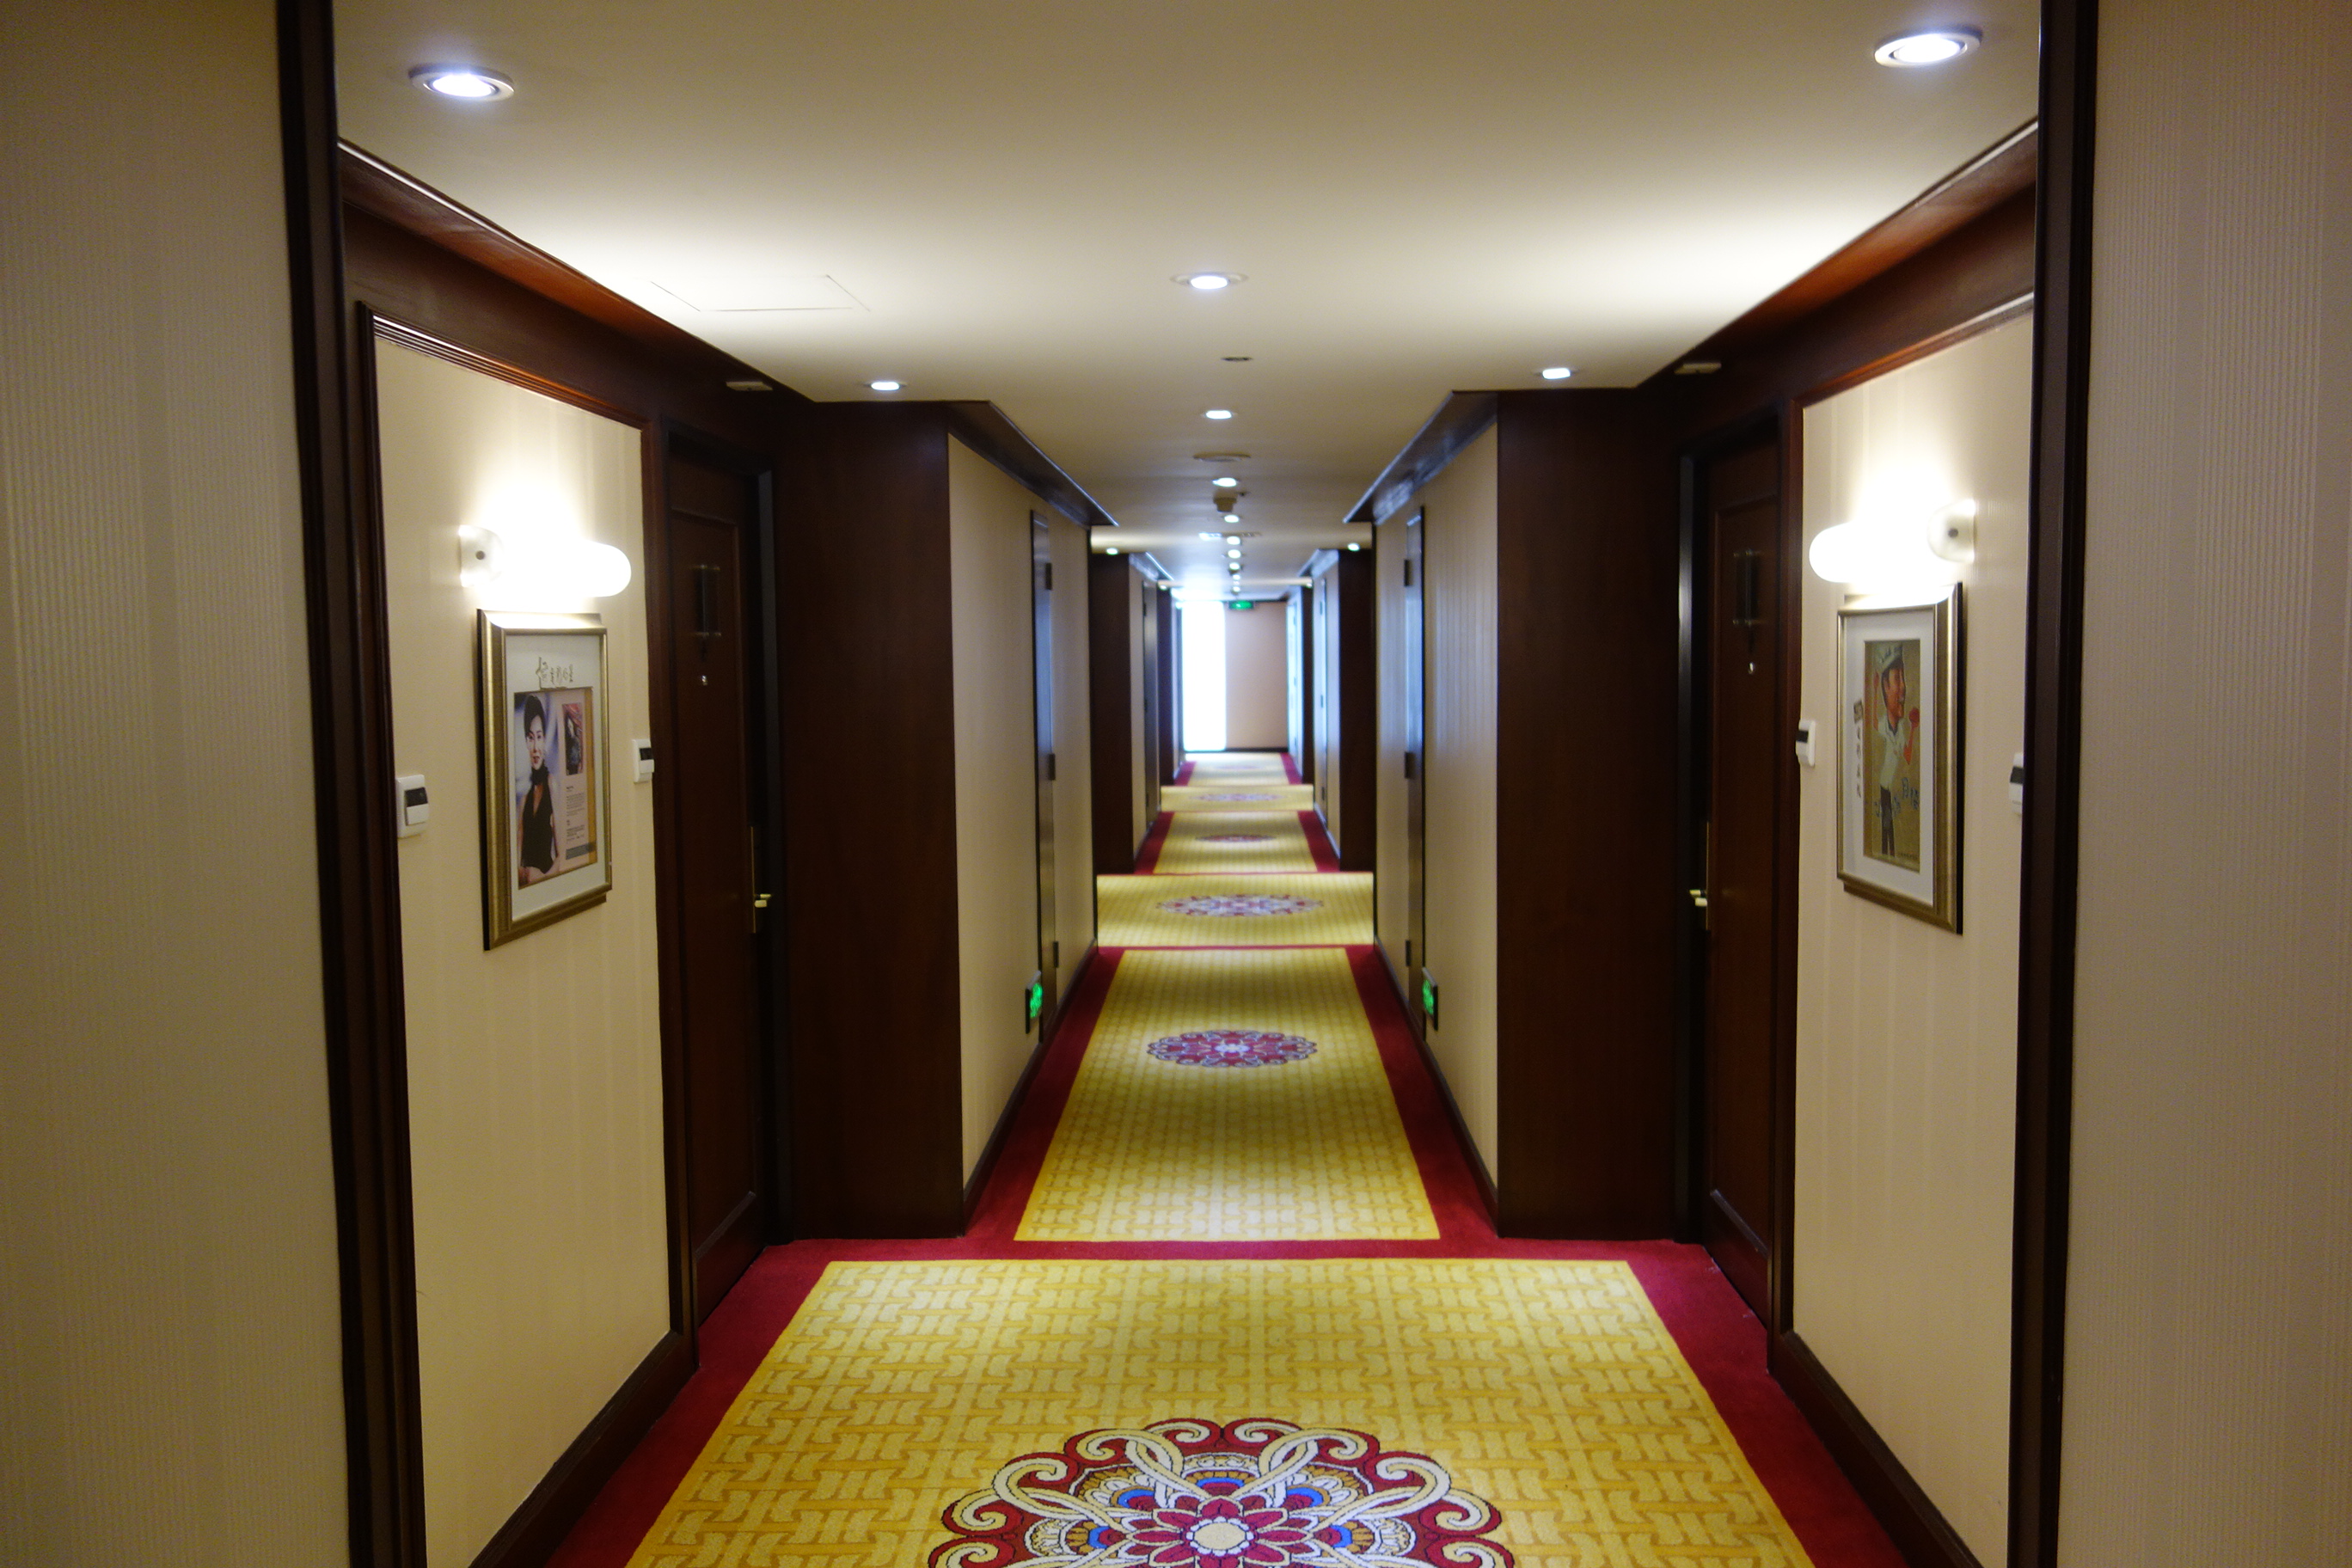 Gaudy hallway